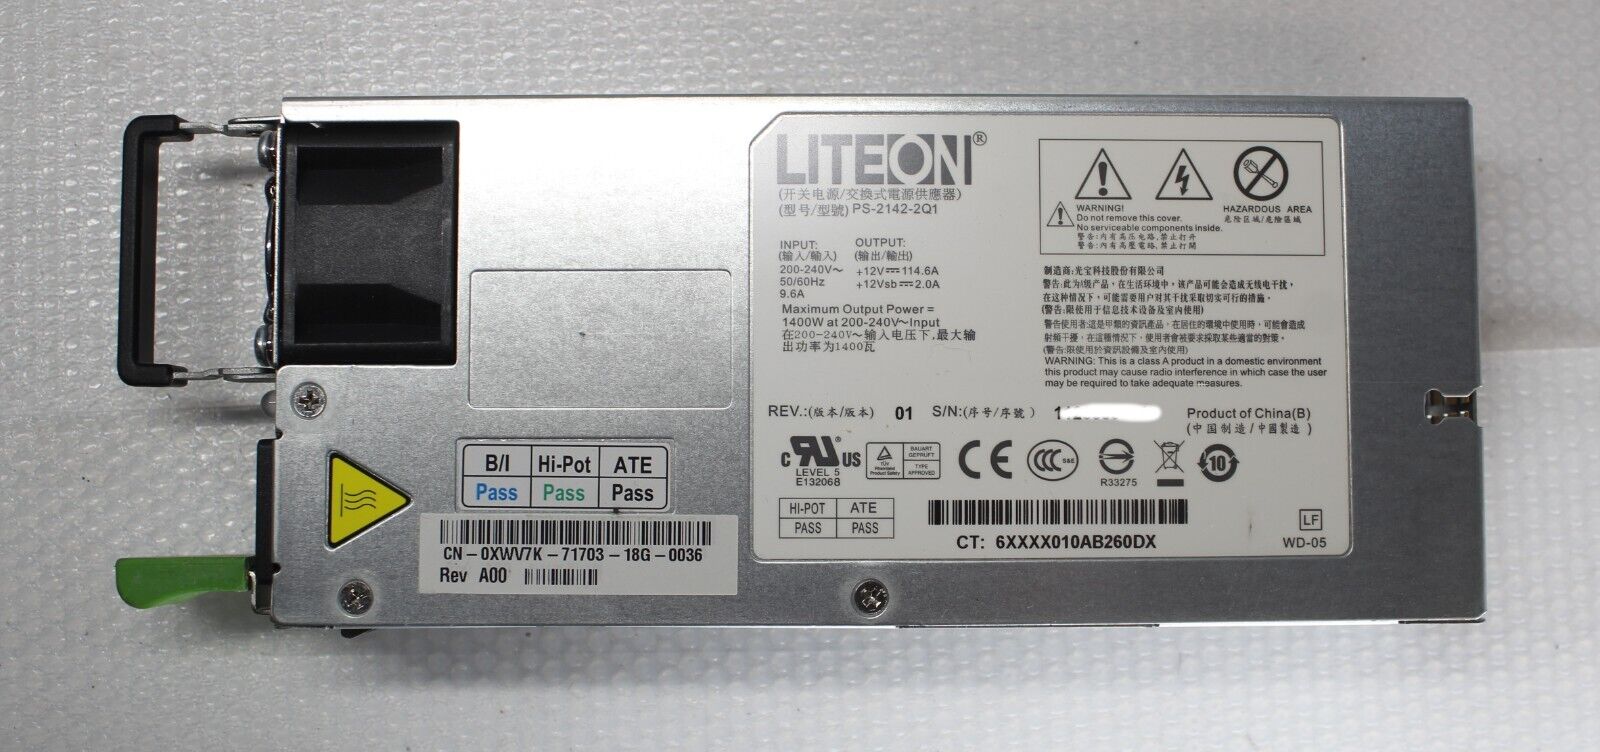 Dell (LiteON) PowerEdge C5220 Servers 1400W Redundant Power Supply DP/N: XWV7K